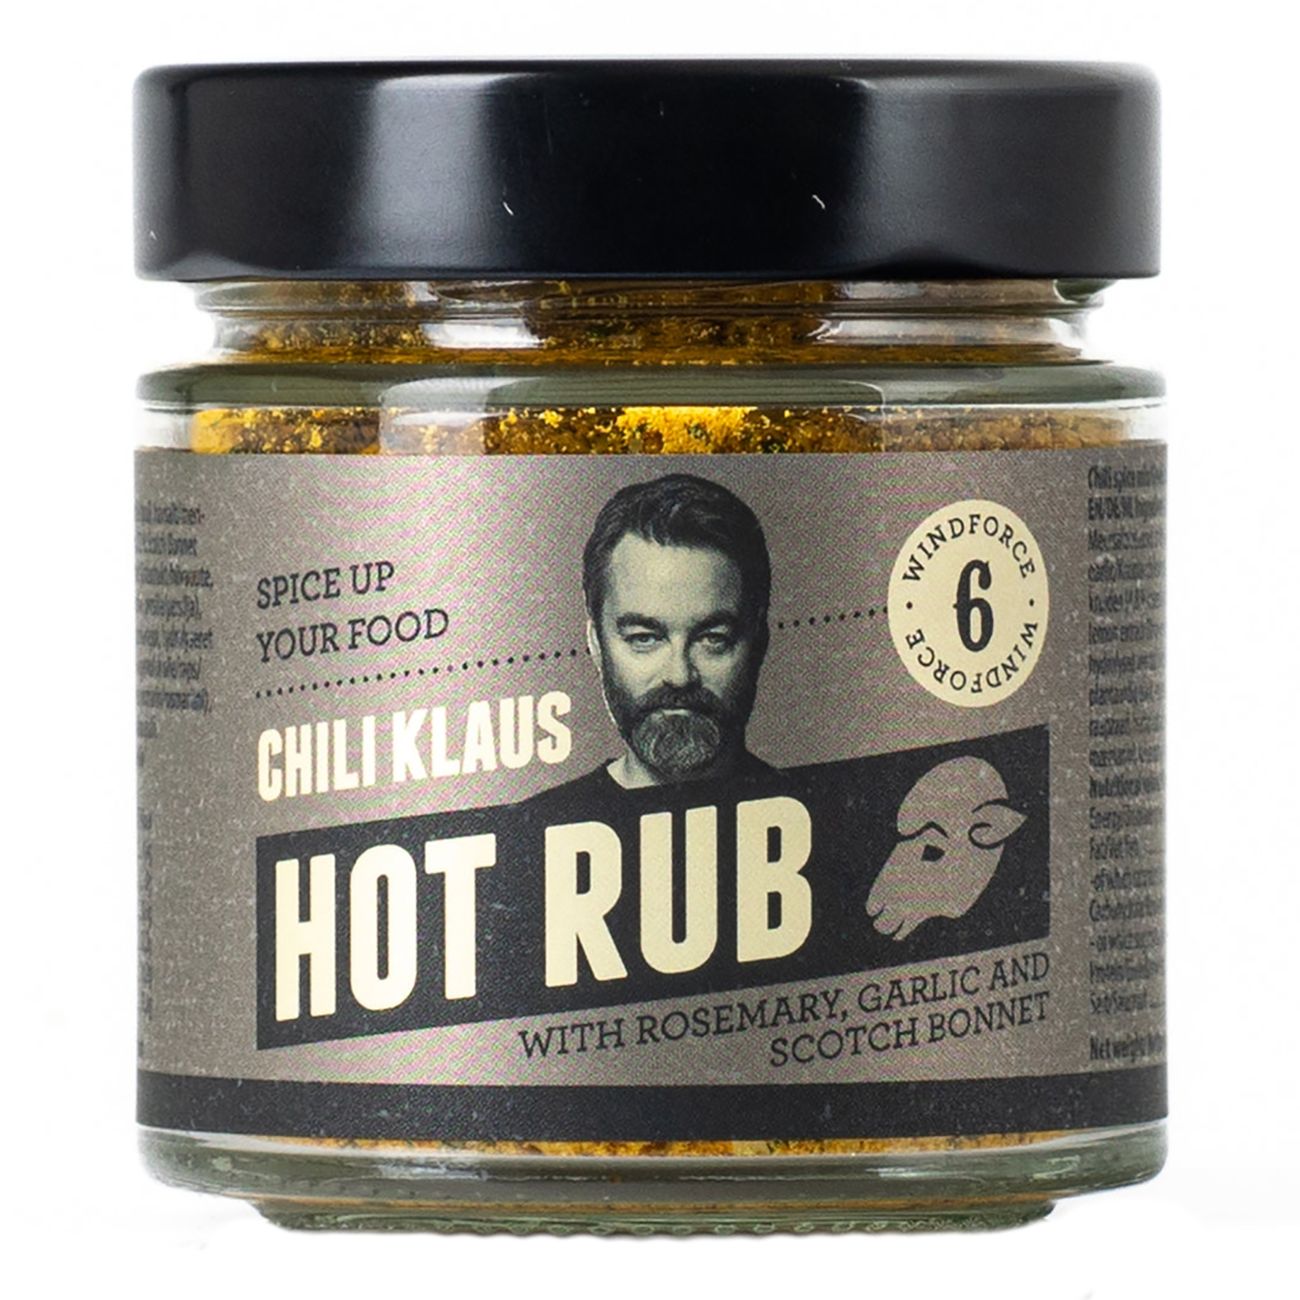 chili-klaus-hot-rub-rosemary-garlic-scotch-bonnet-91117-1